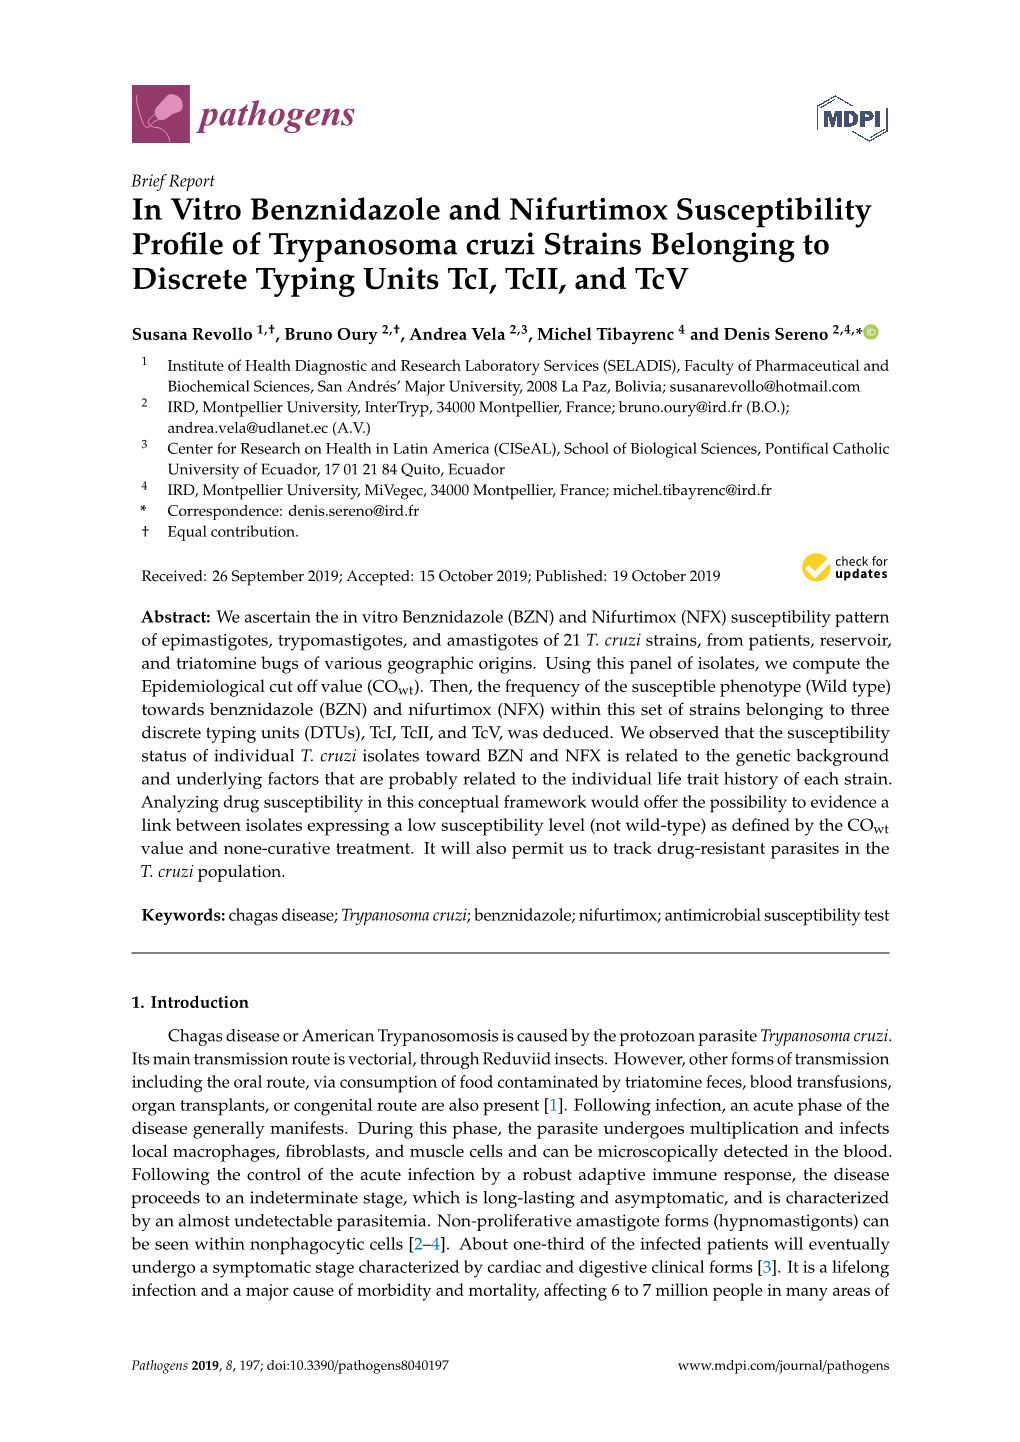 In Vitro Benznidazole and Nifurtimox Susceptibility Profile of Trypanosoma Cruzi Strains Belonging to Discrete Typing Units